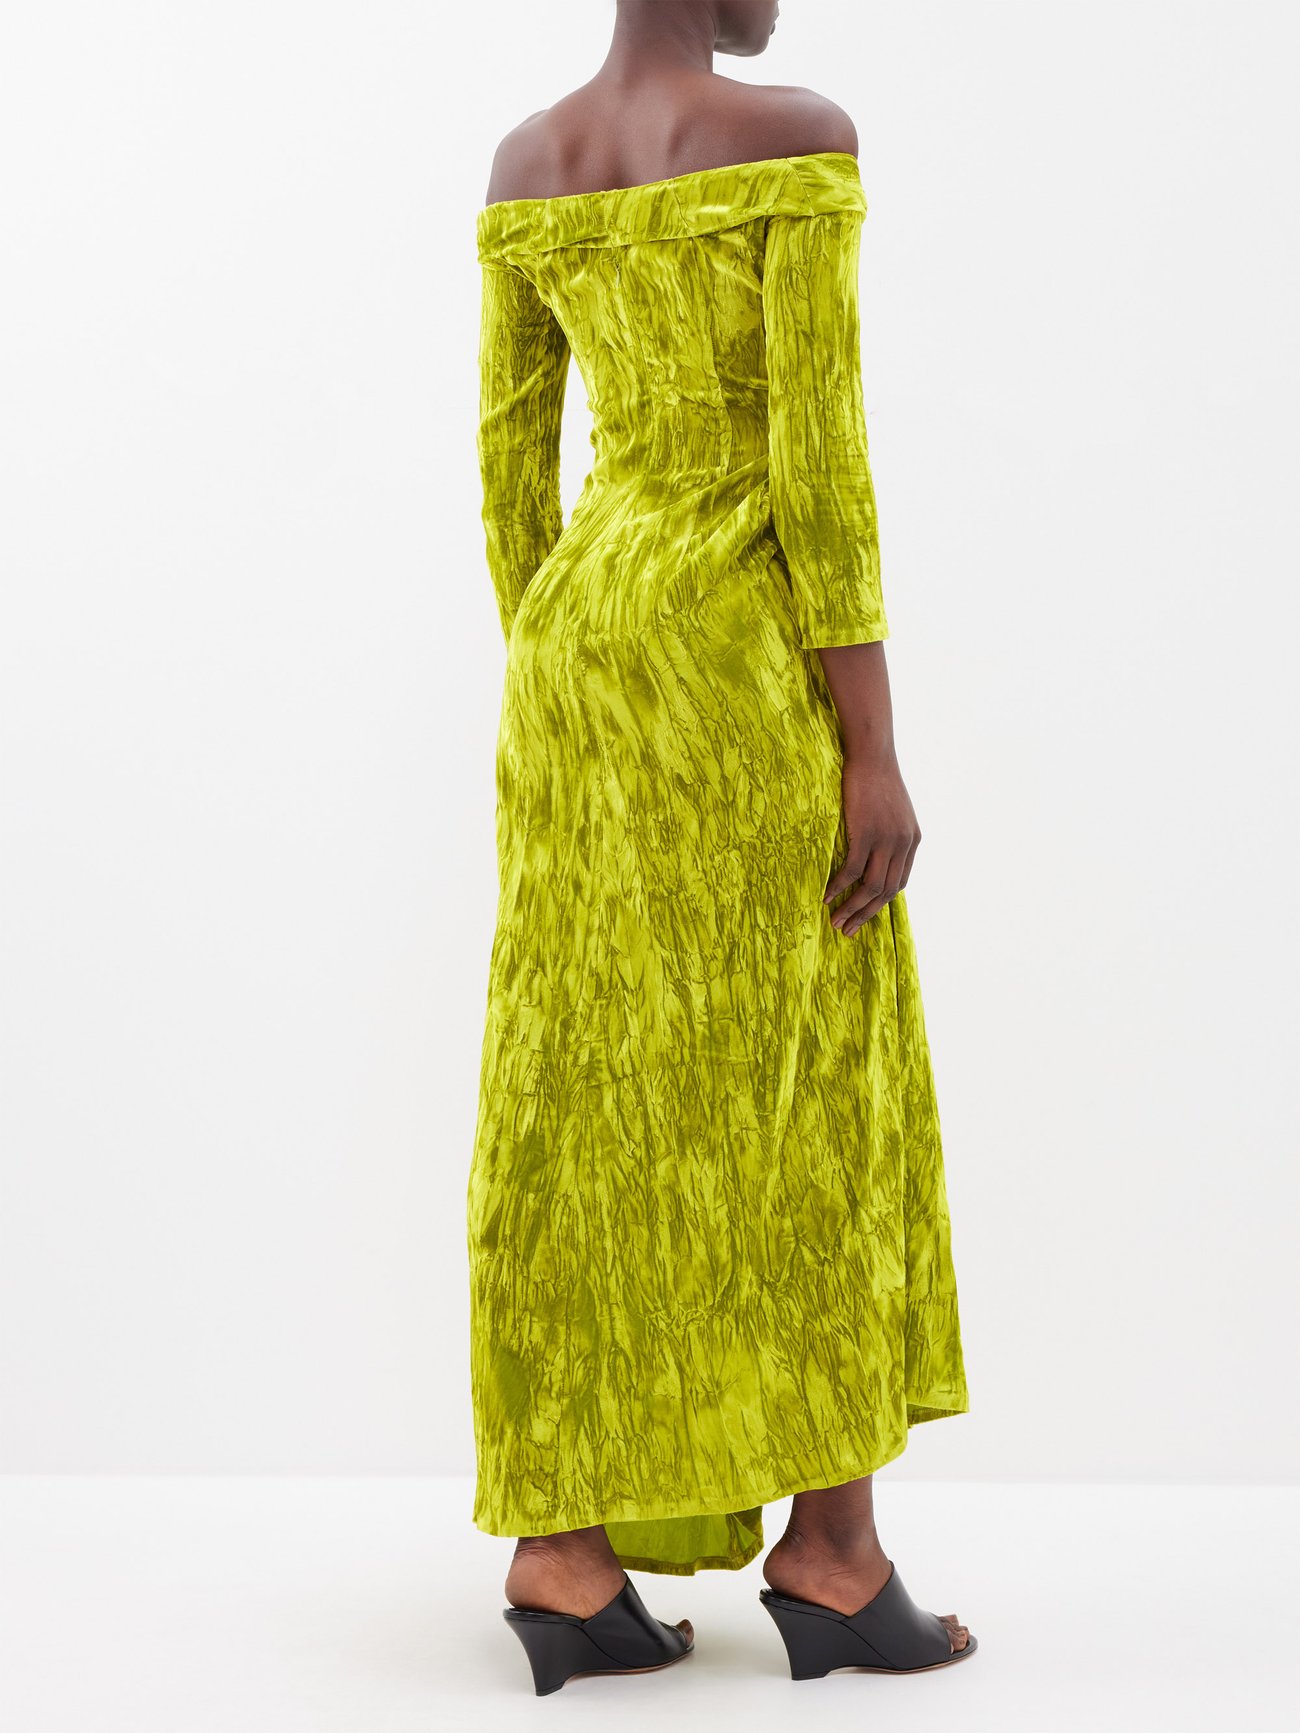 Velvet Fabric: Dresses This Season - Alesayi Fashion